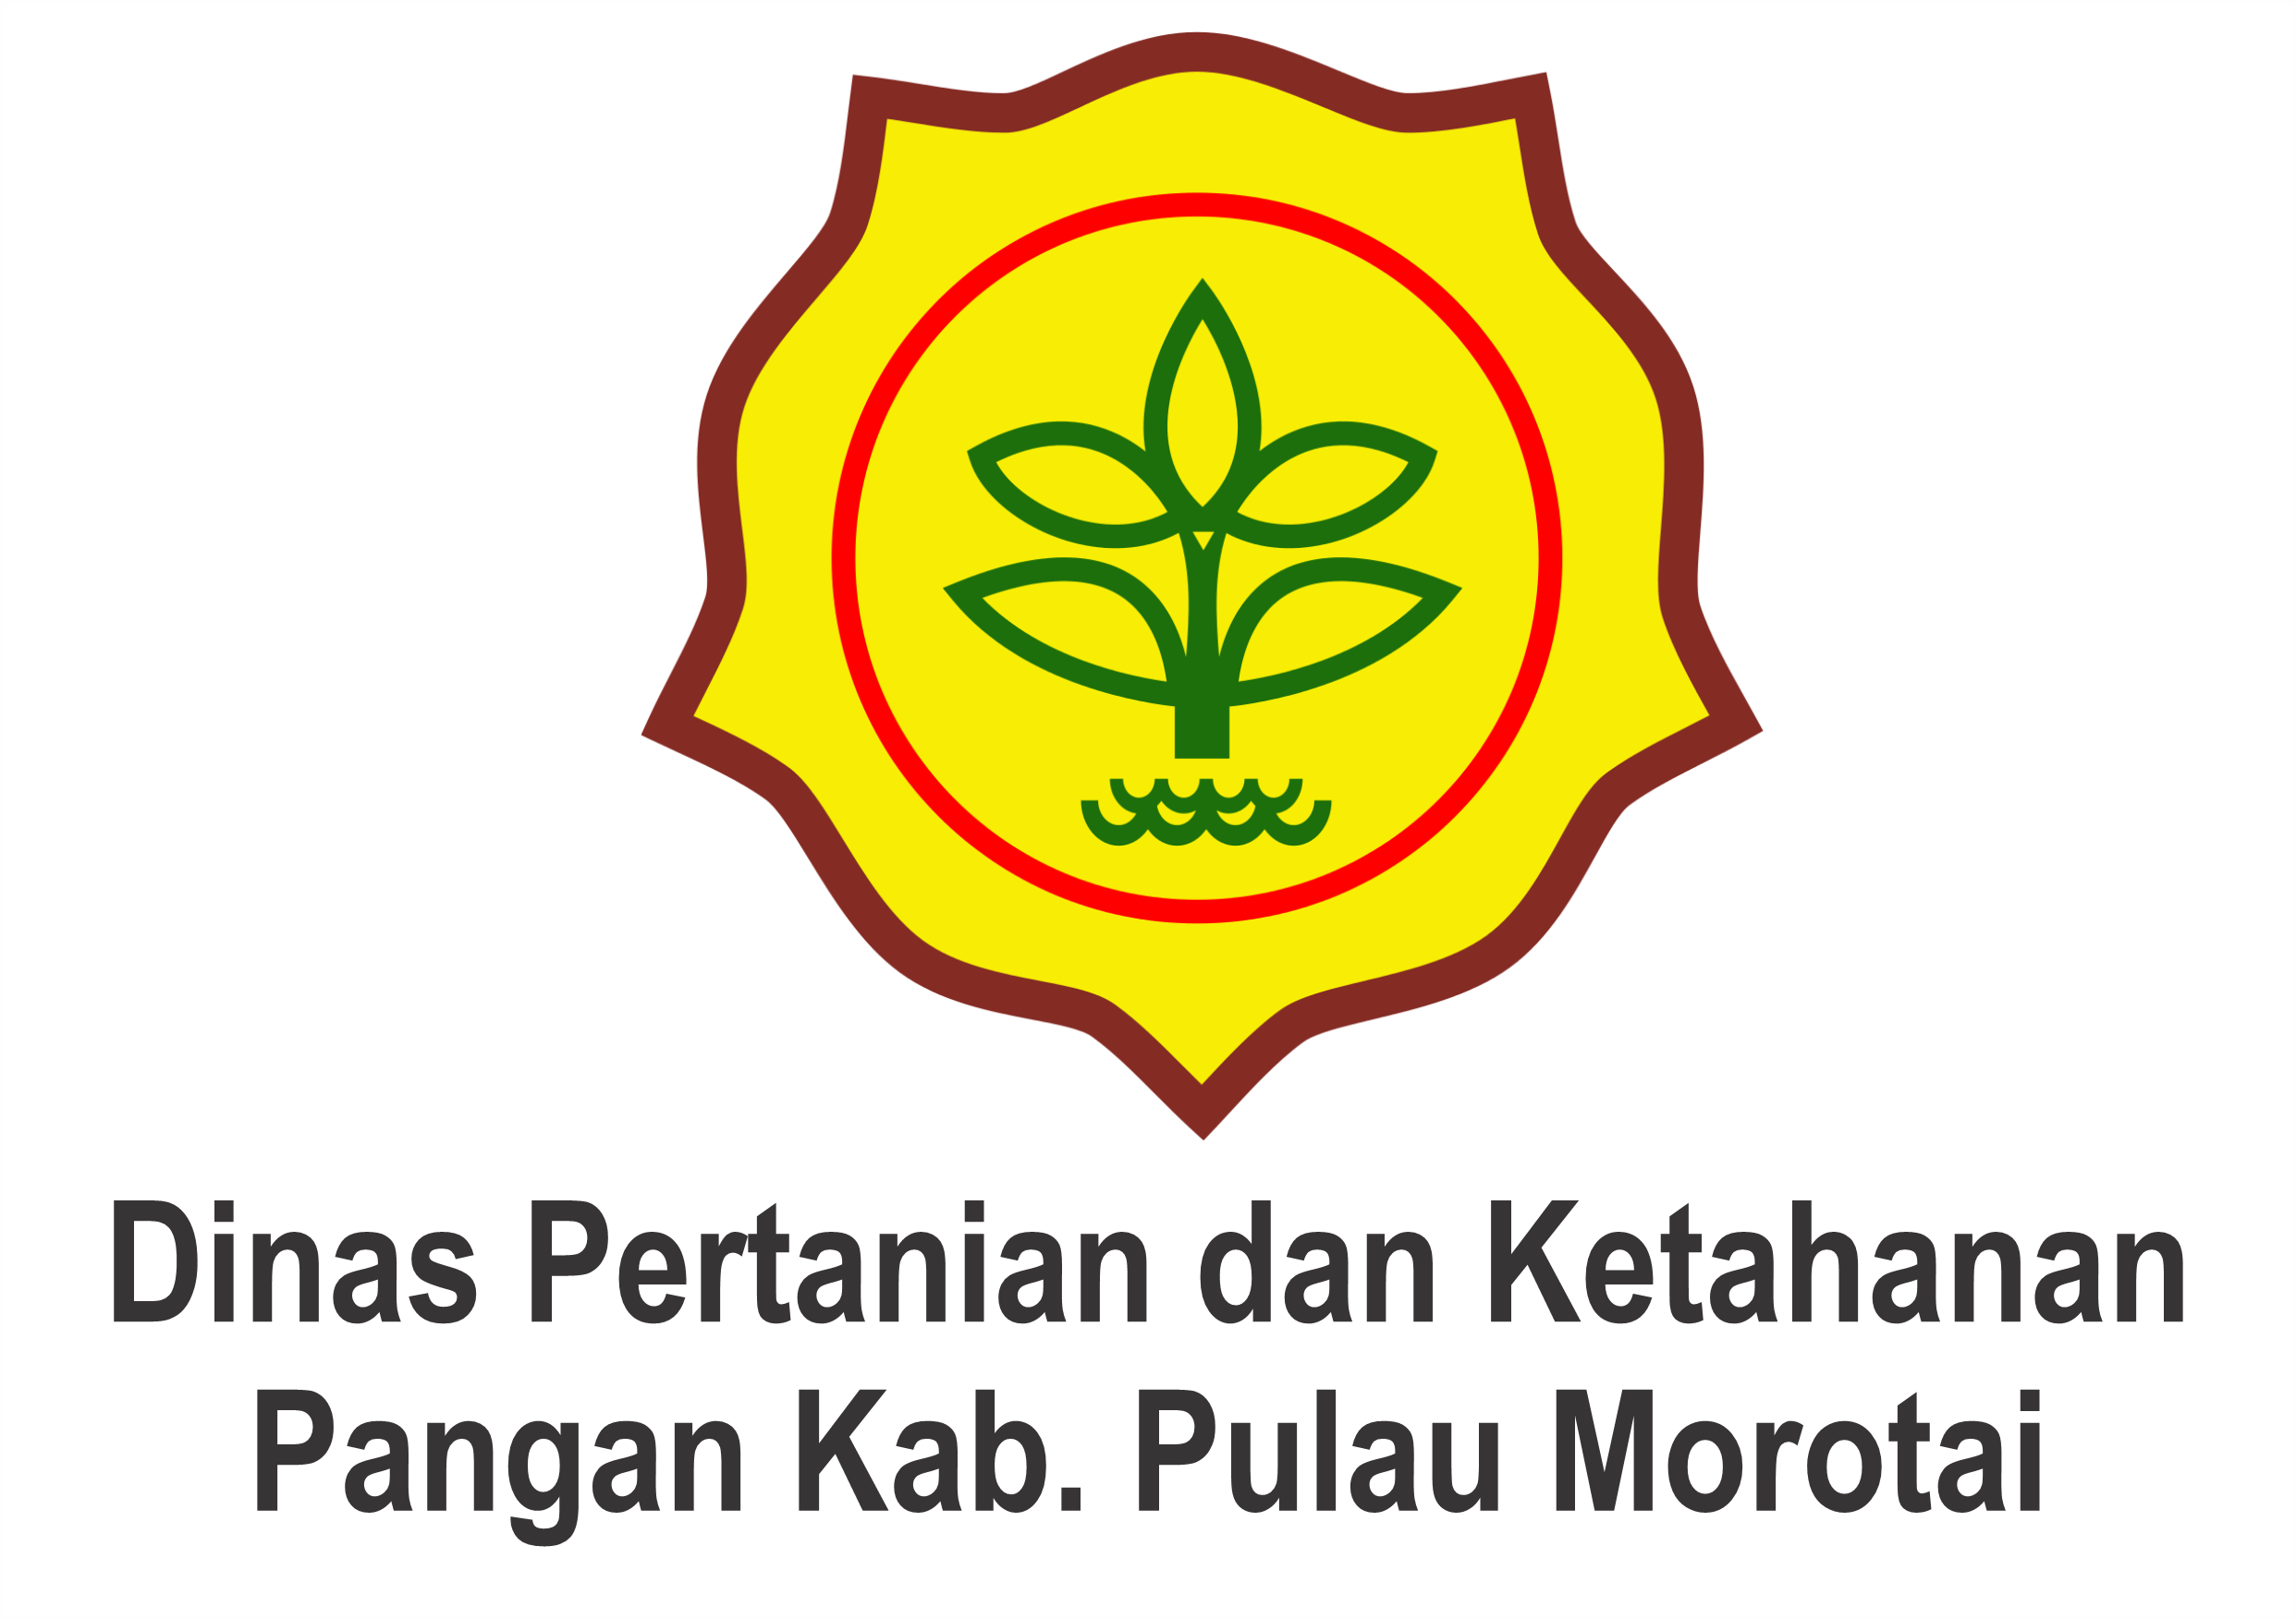 Dinas Pertanian dan Ketahanan Pangan Kab. Pulau Morotai